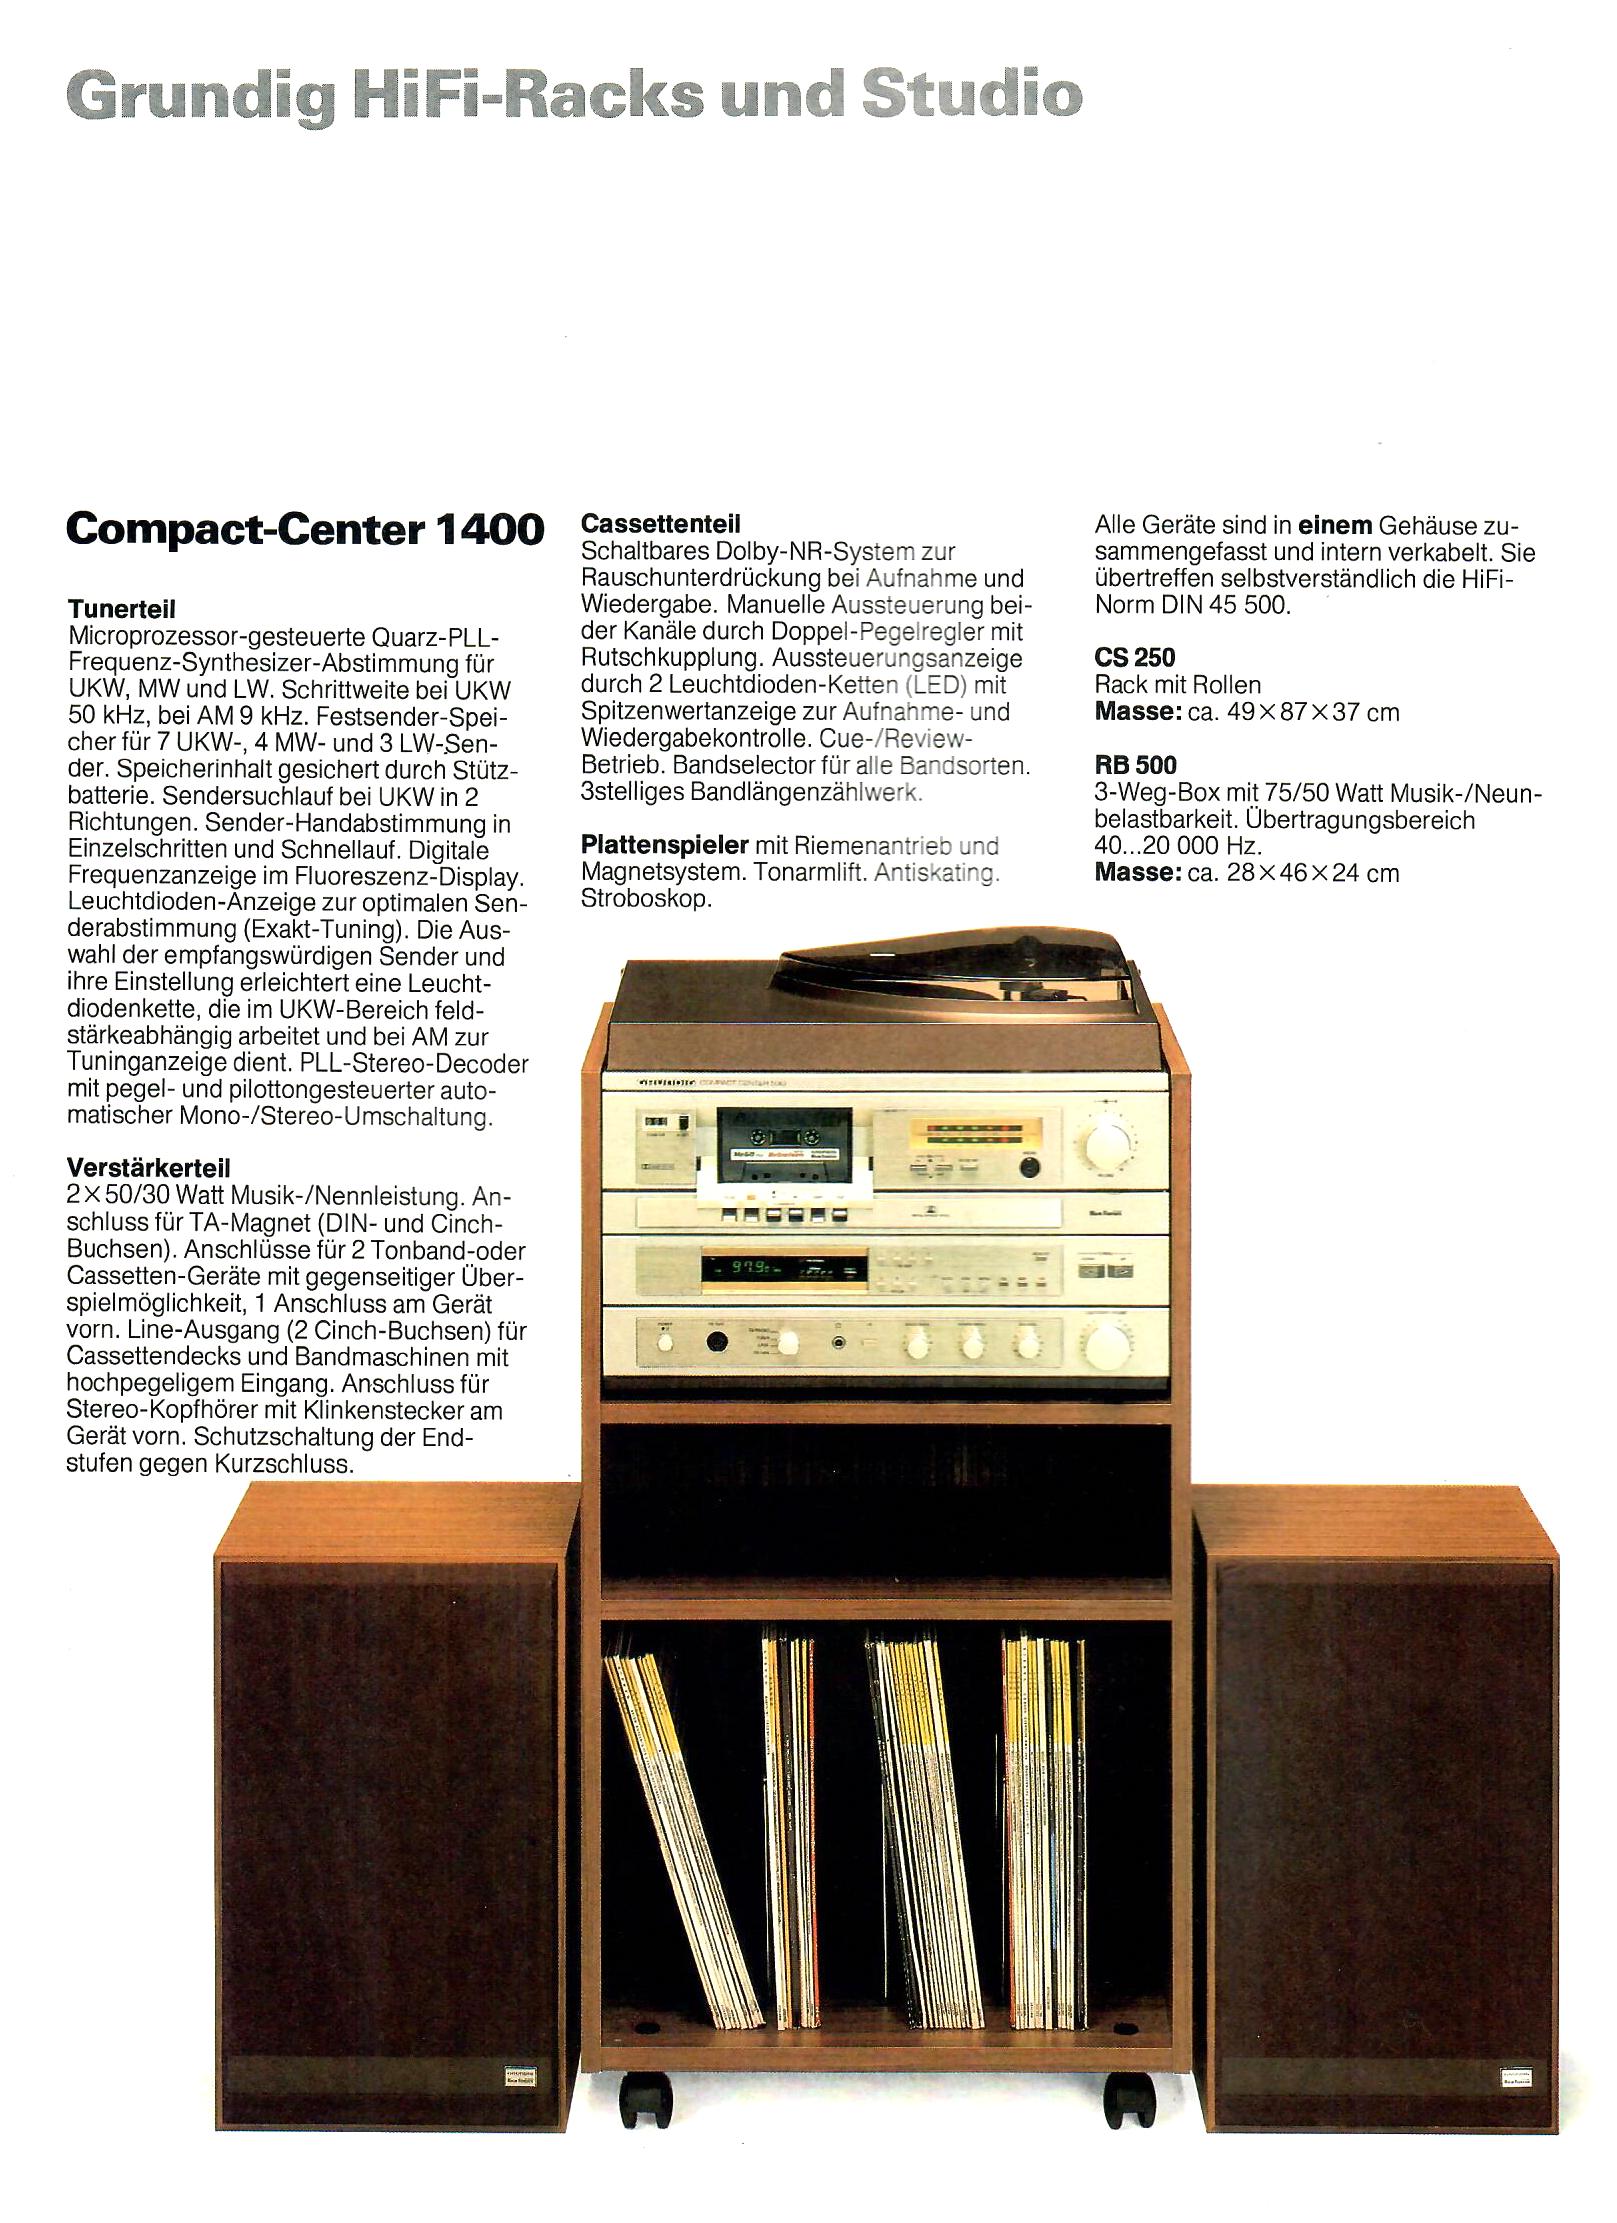 Grundig Compact Center 1400-Prospekt-1983.jpg